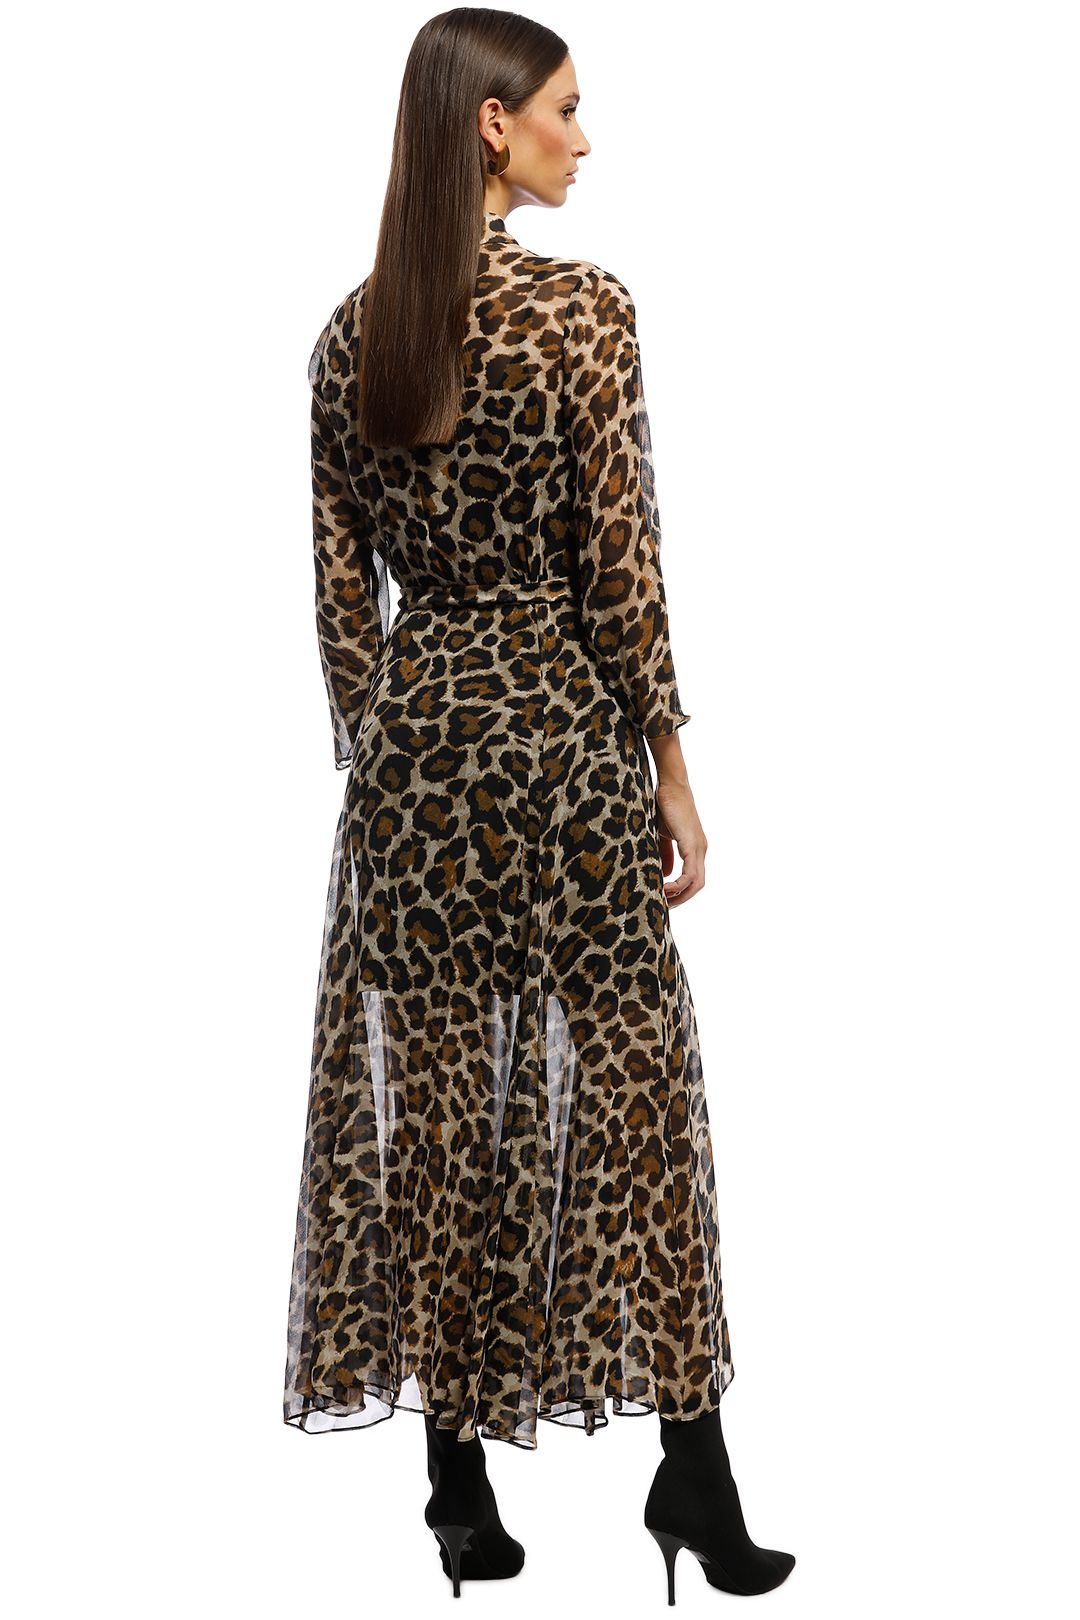 Husk - Aria Dress - Leopard Print - Brown - Back